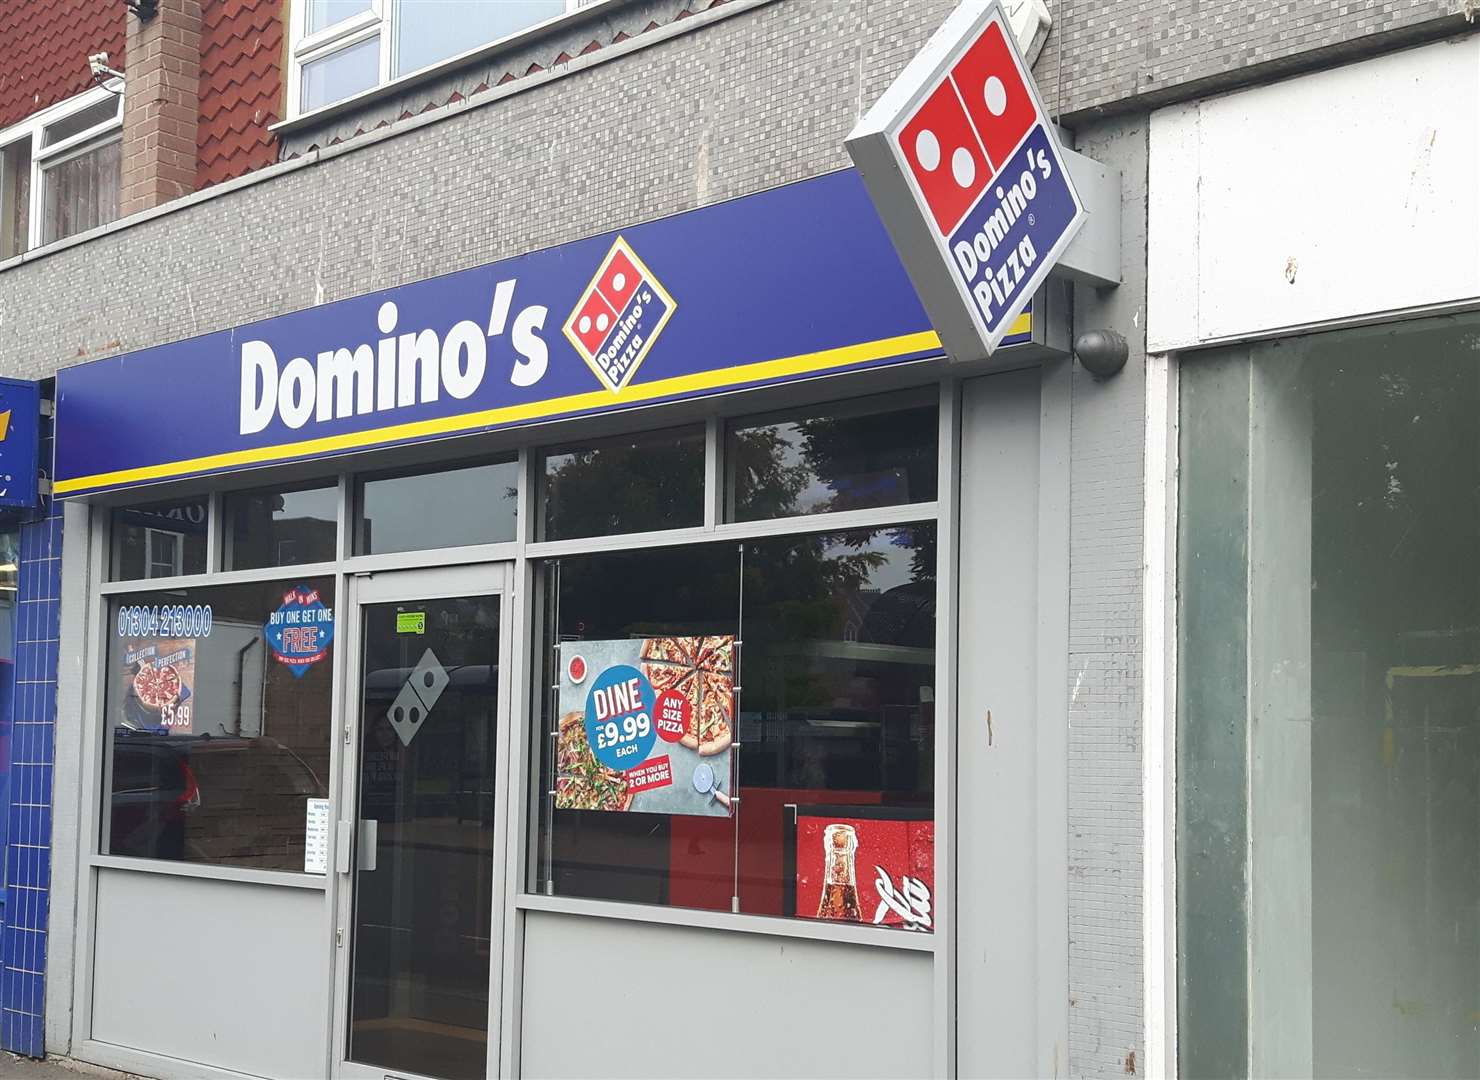 Domino's Pizza, Pencester Road. Library image: Sam Lennon KMG